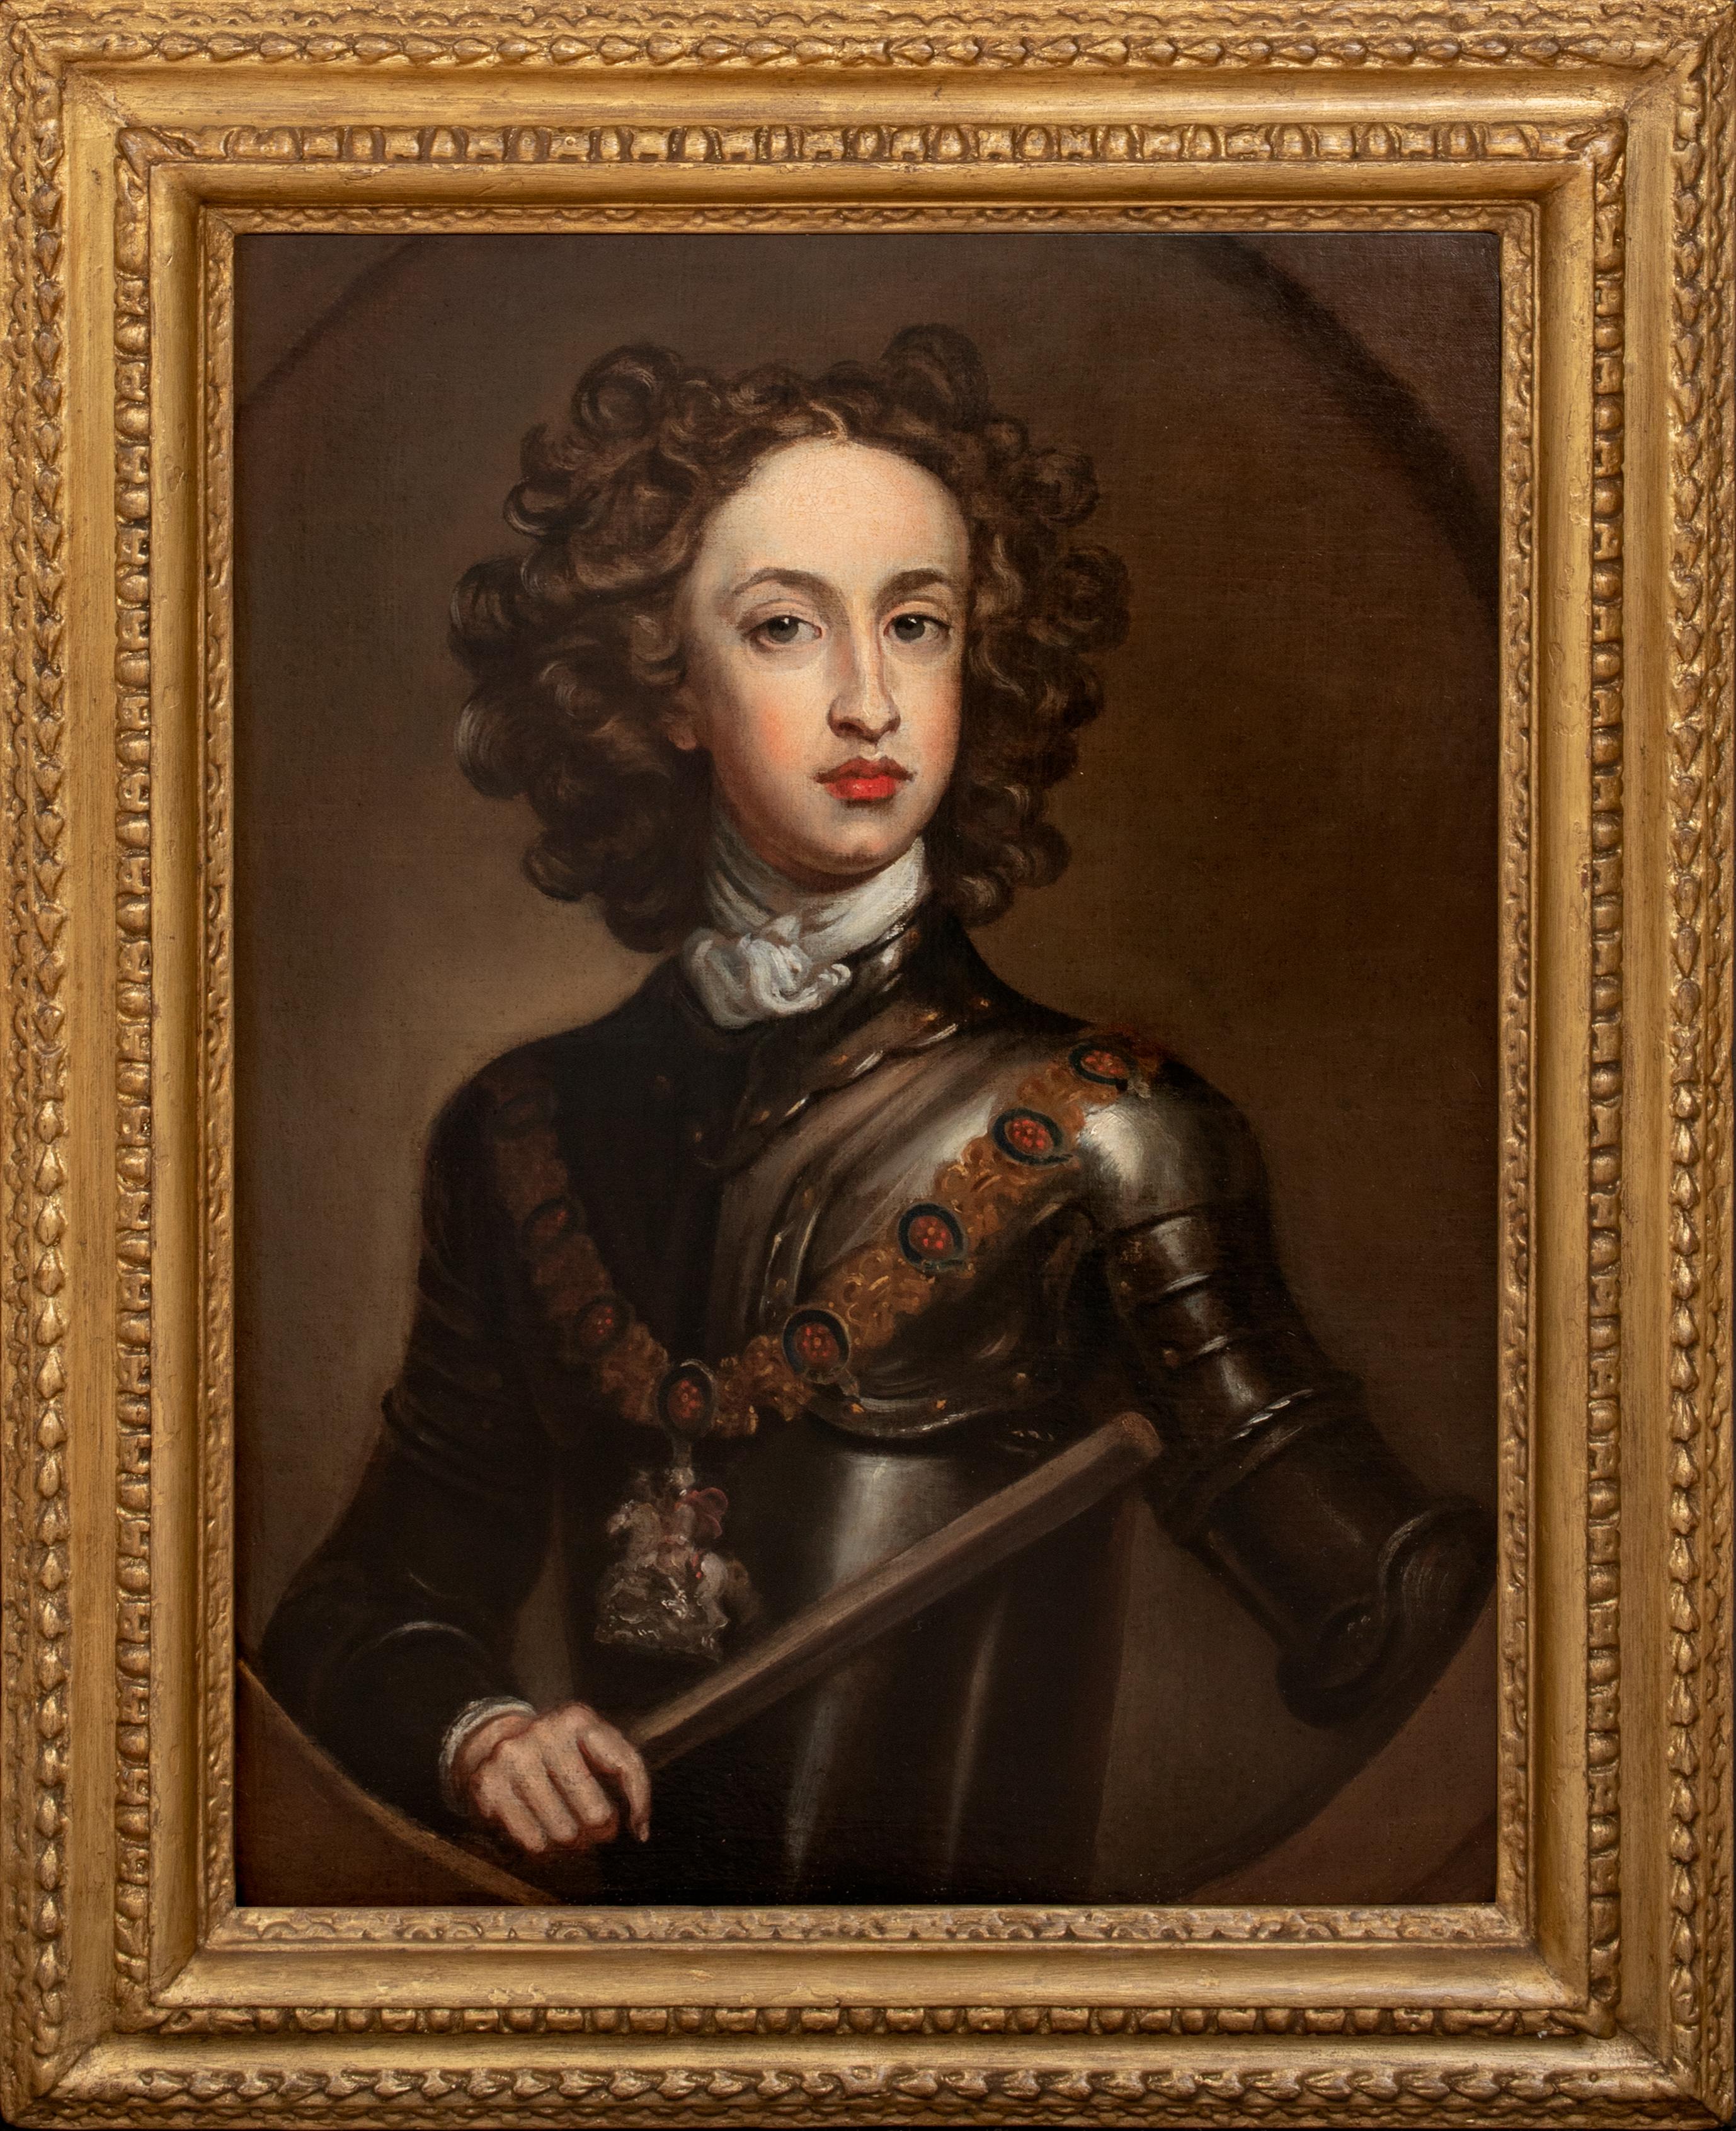 Sir Godfrey Kneller Portrait Painting - Portrait Of Prince William Duke of Gloucester (1689-1700), 17th Century   